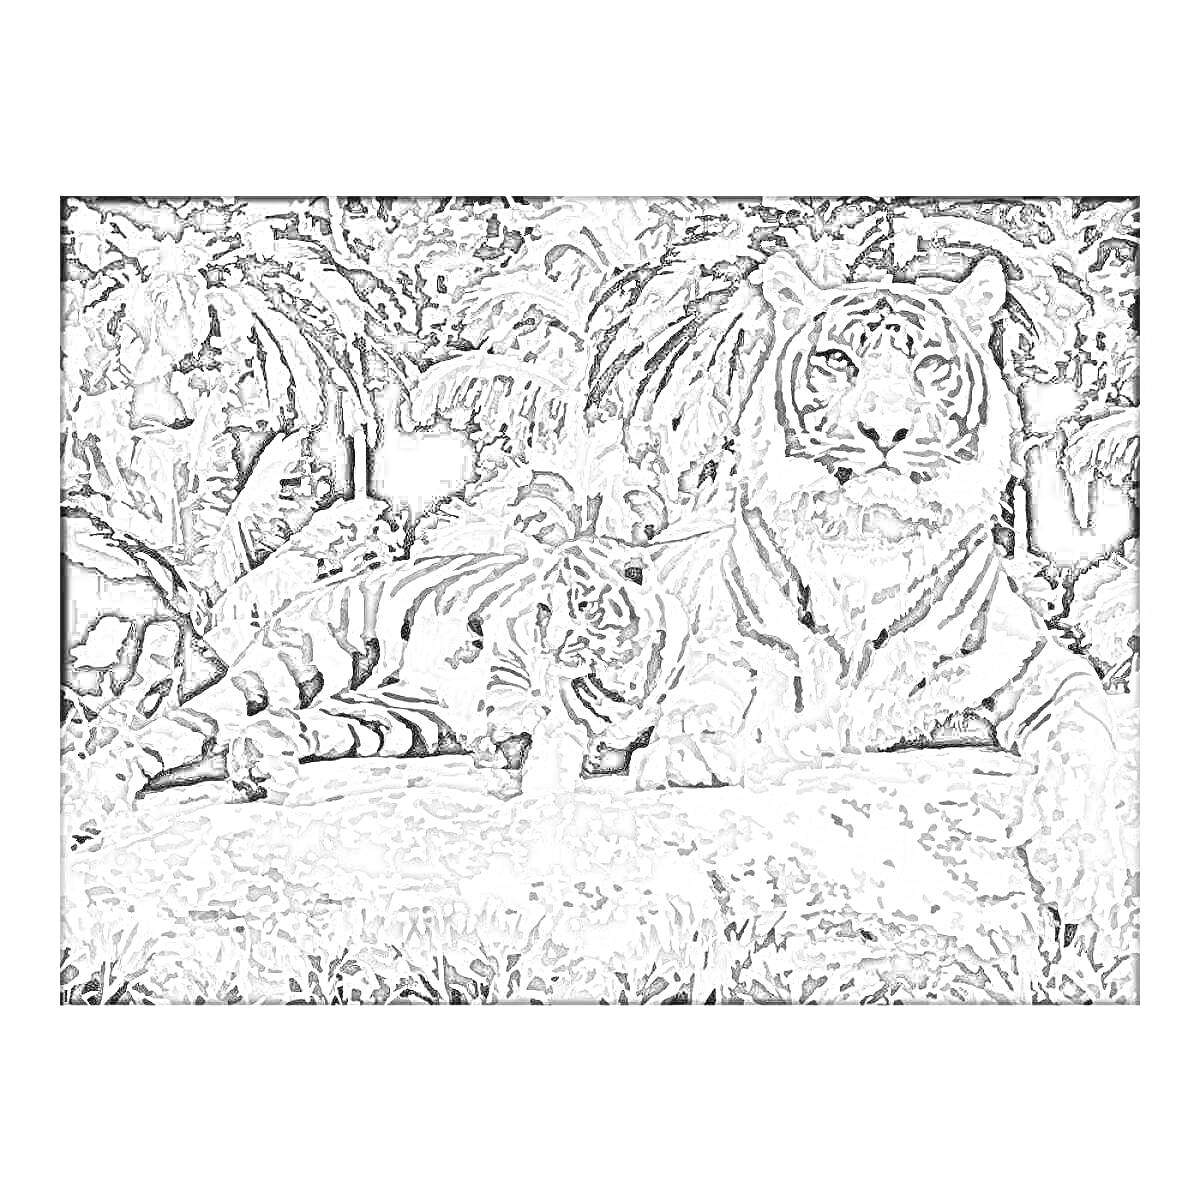 На раскраске изображено: По номерам, Тигр, Джунгли, Природа, Камни, Животные